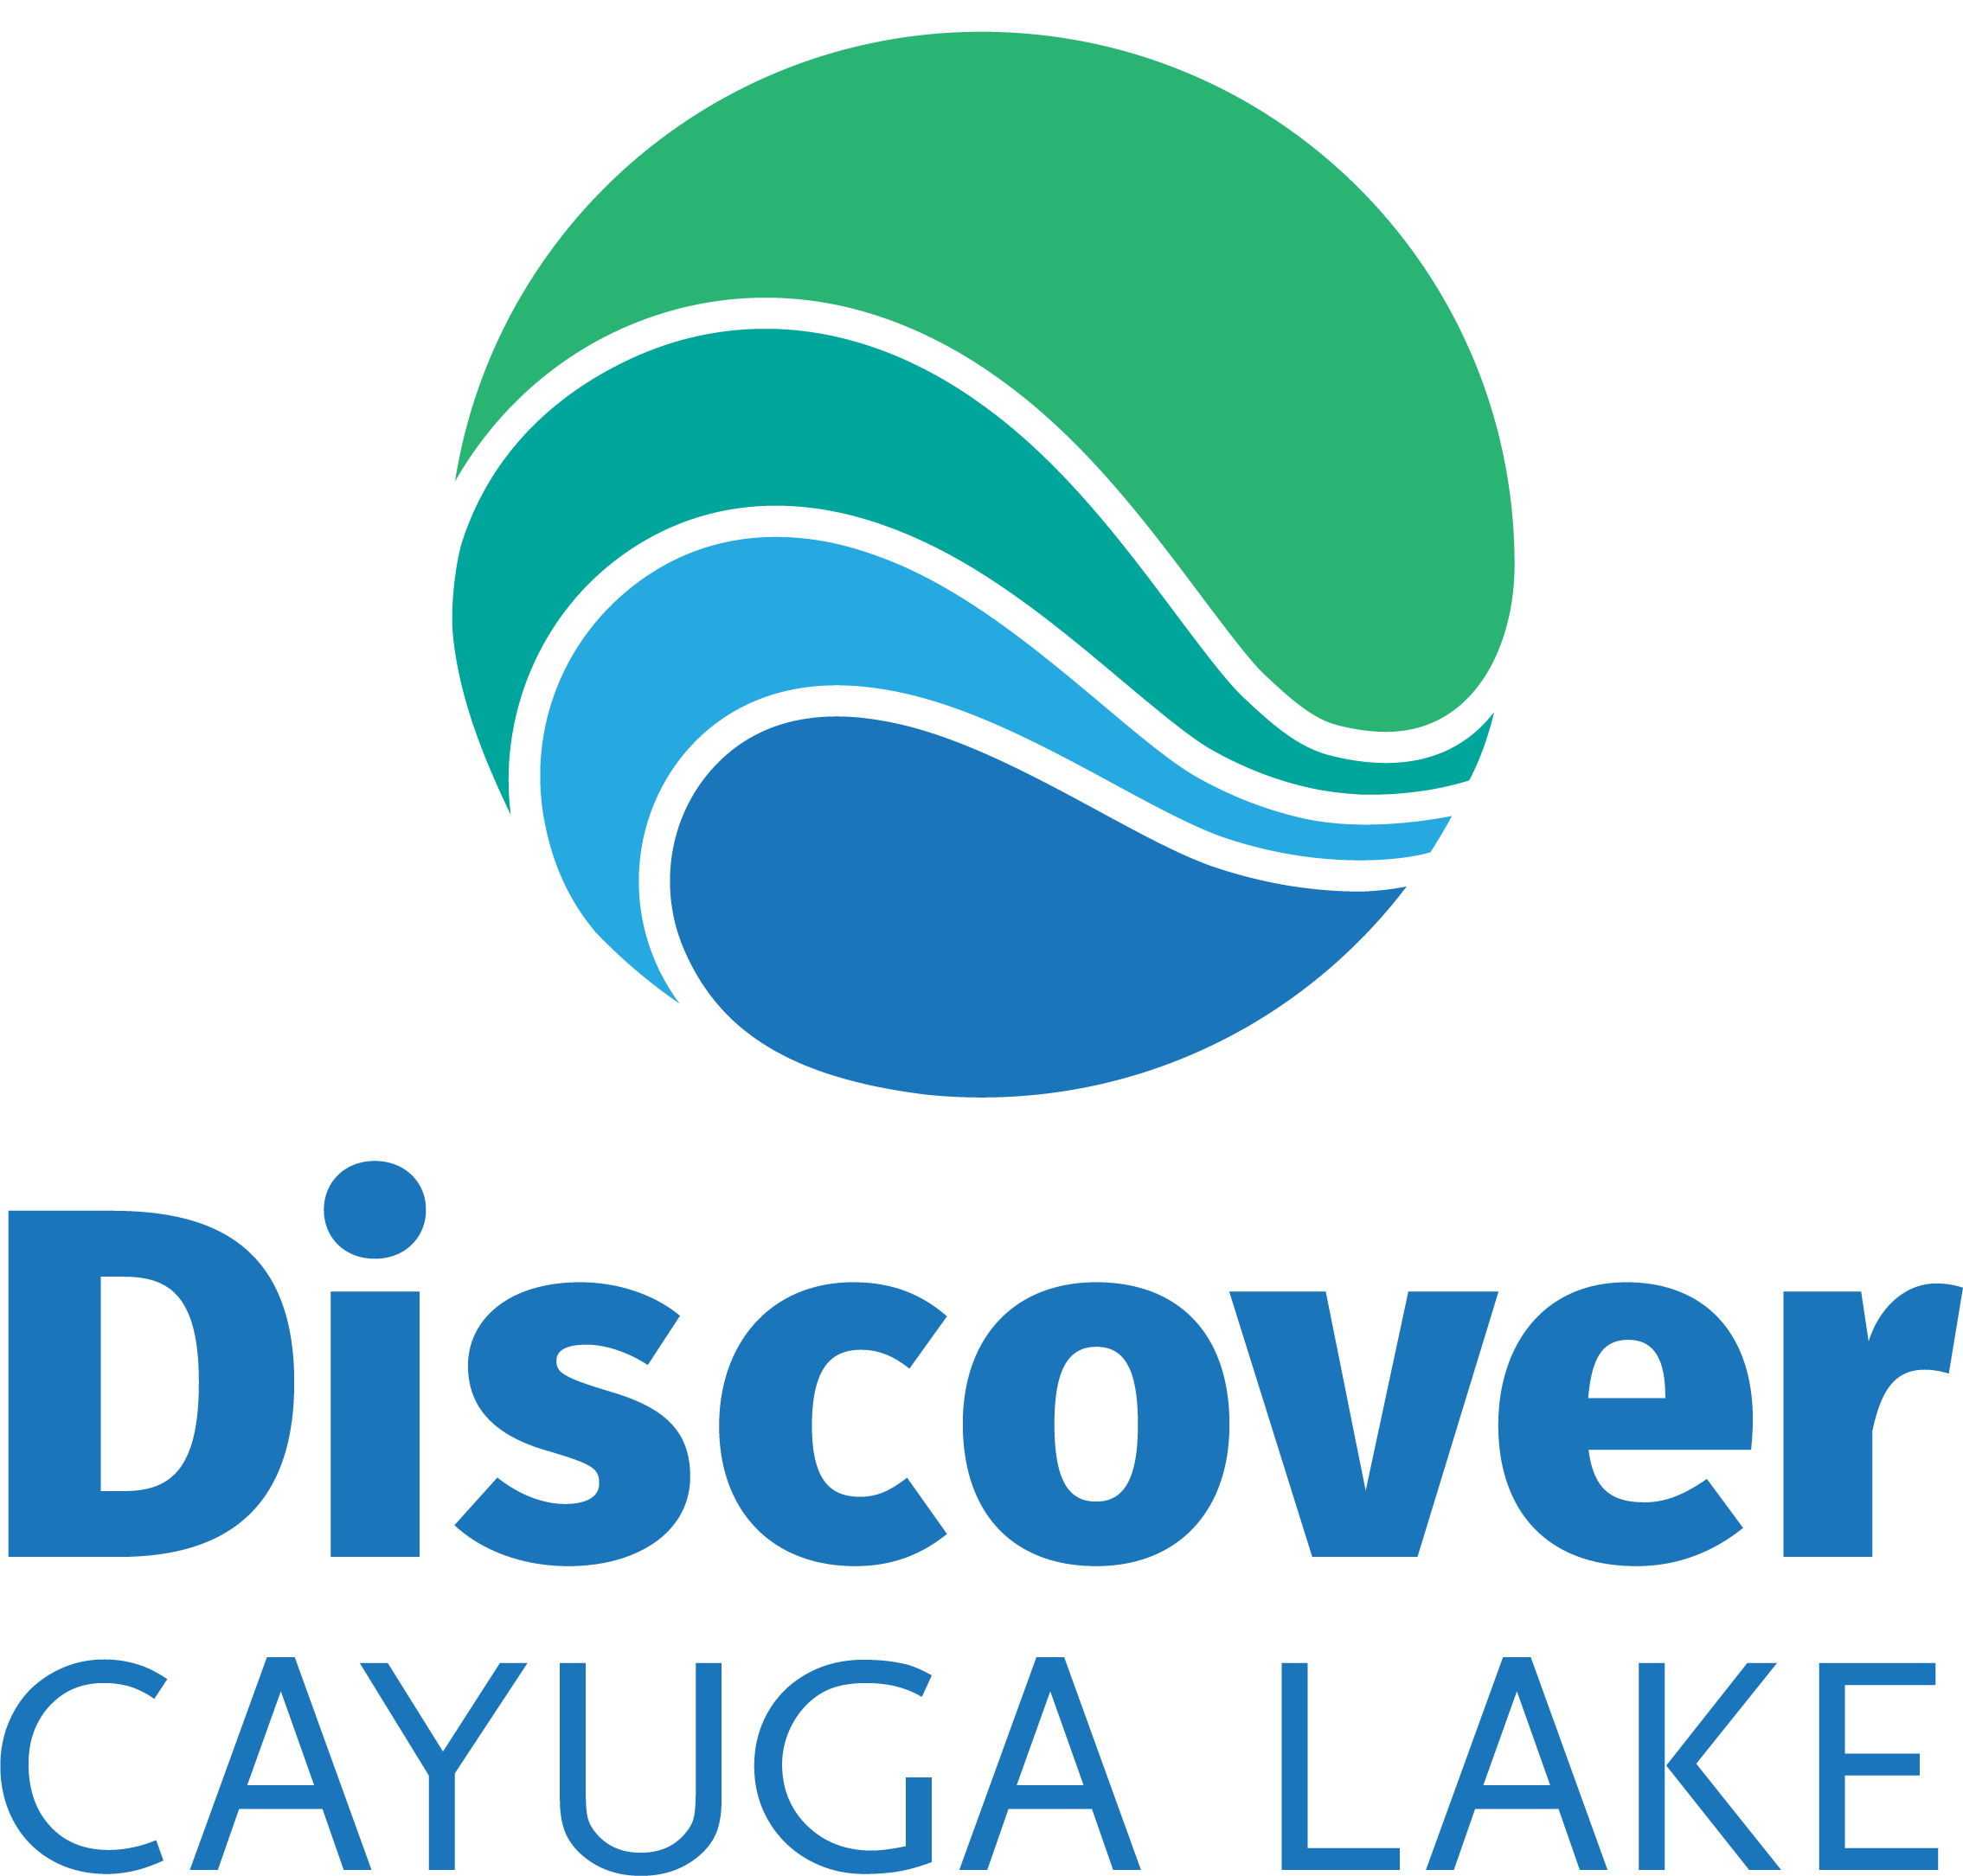 Discover Cayuga Lake logo and link